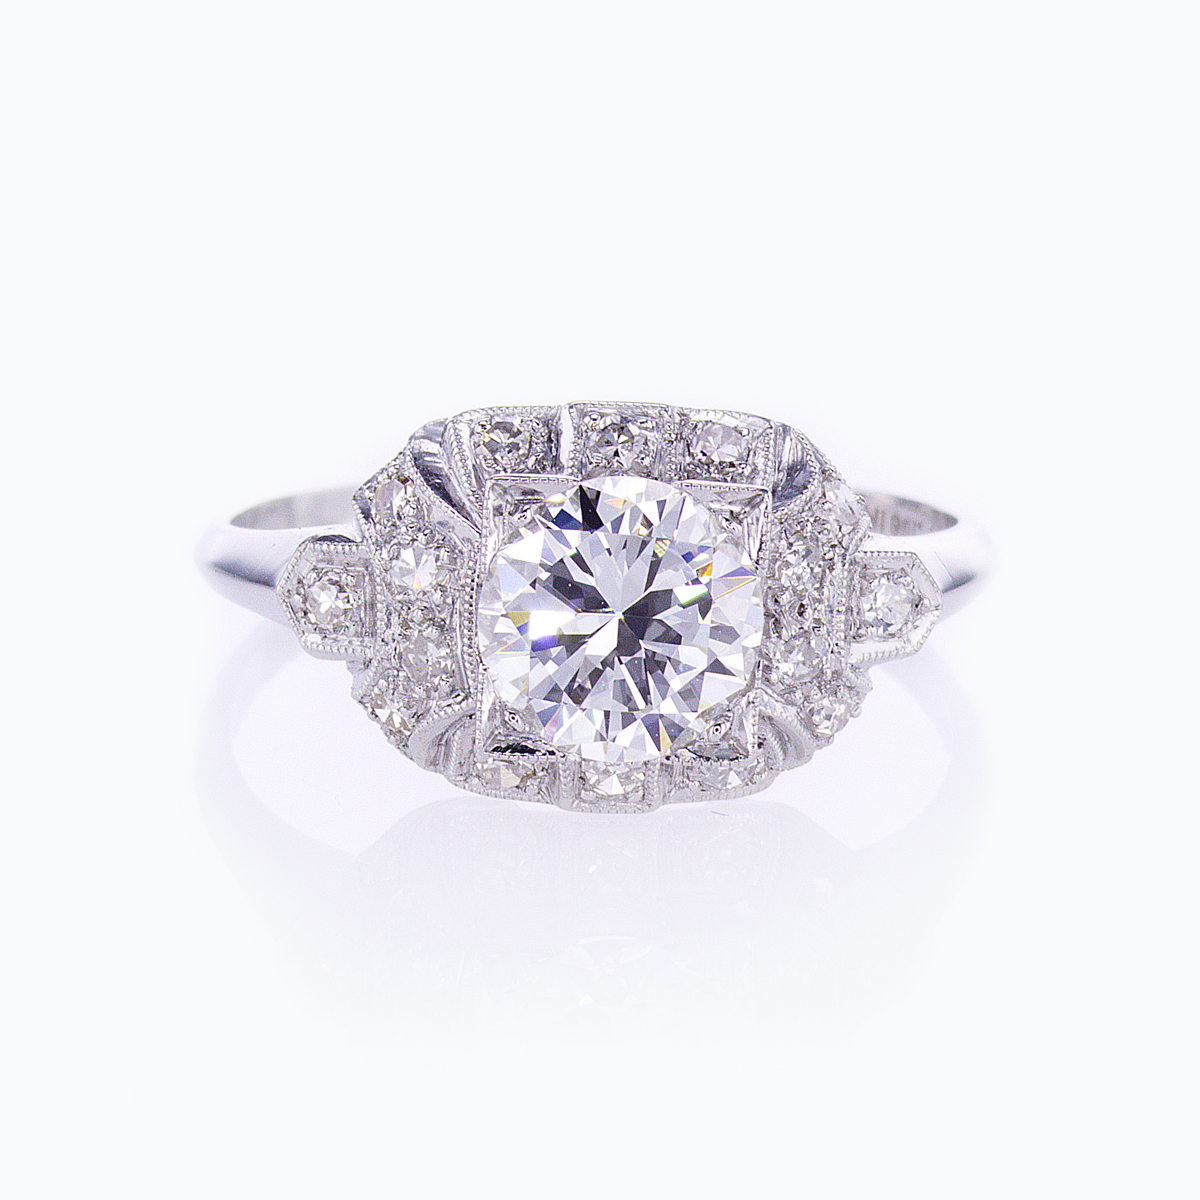 Vintage Art Deco Diamond Engagement Ring, Platinum